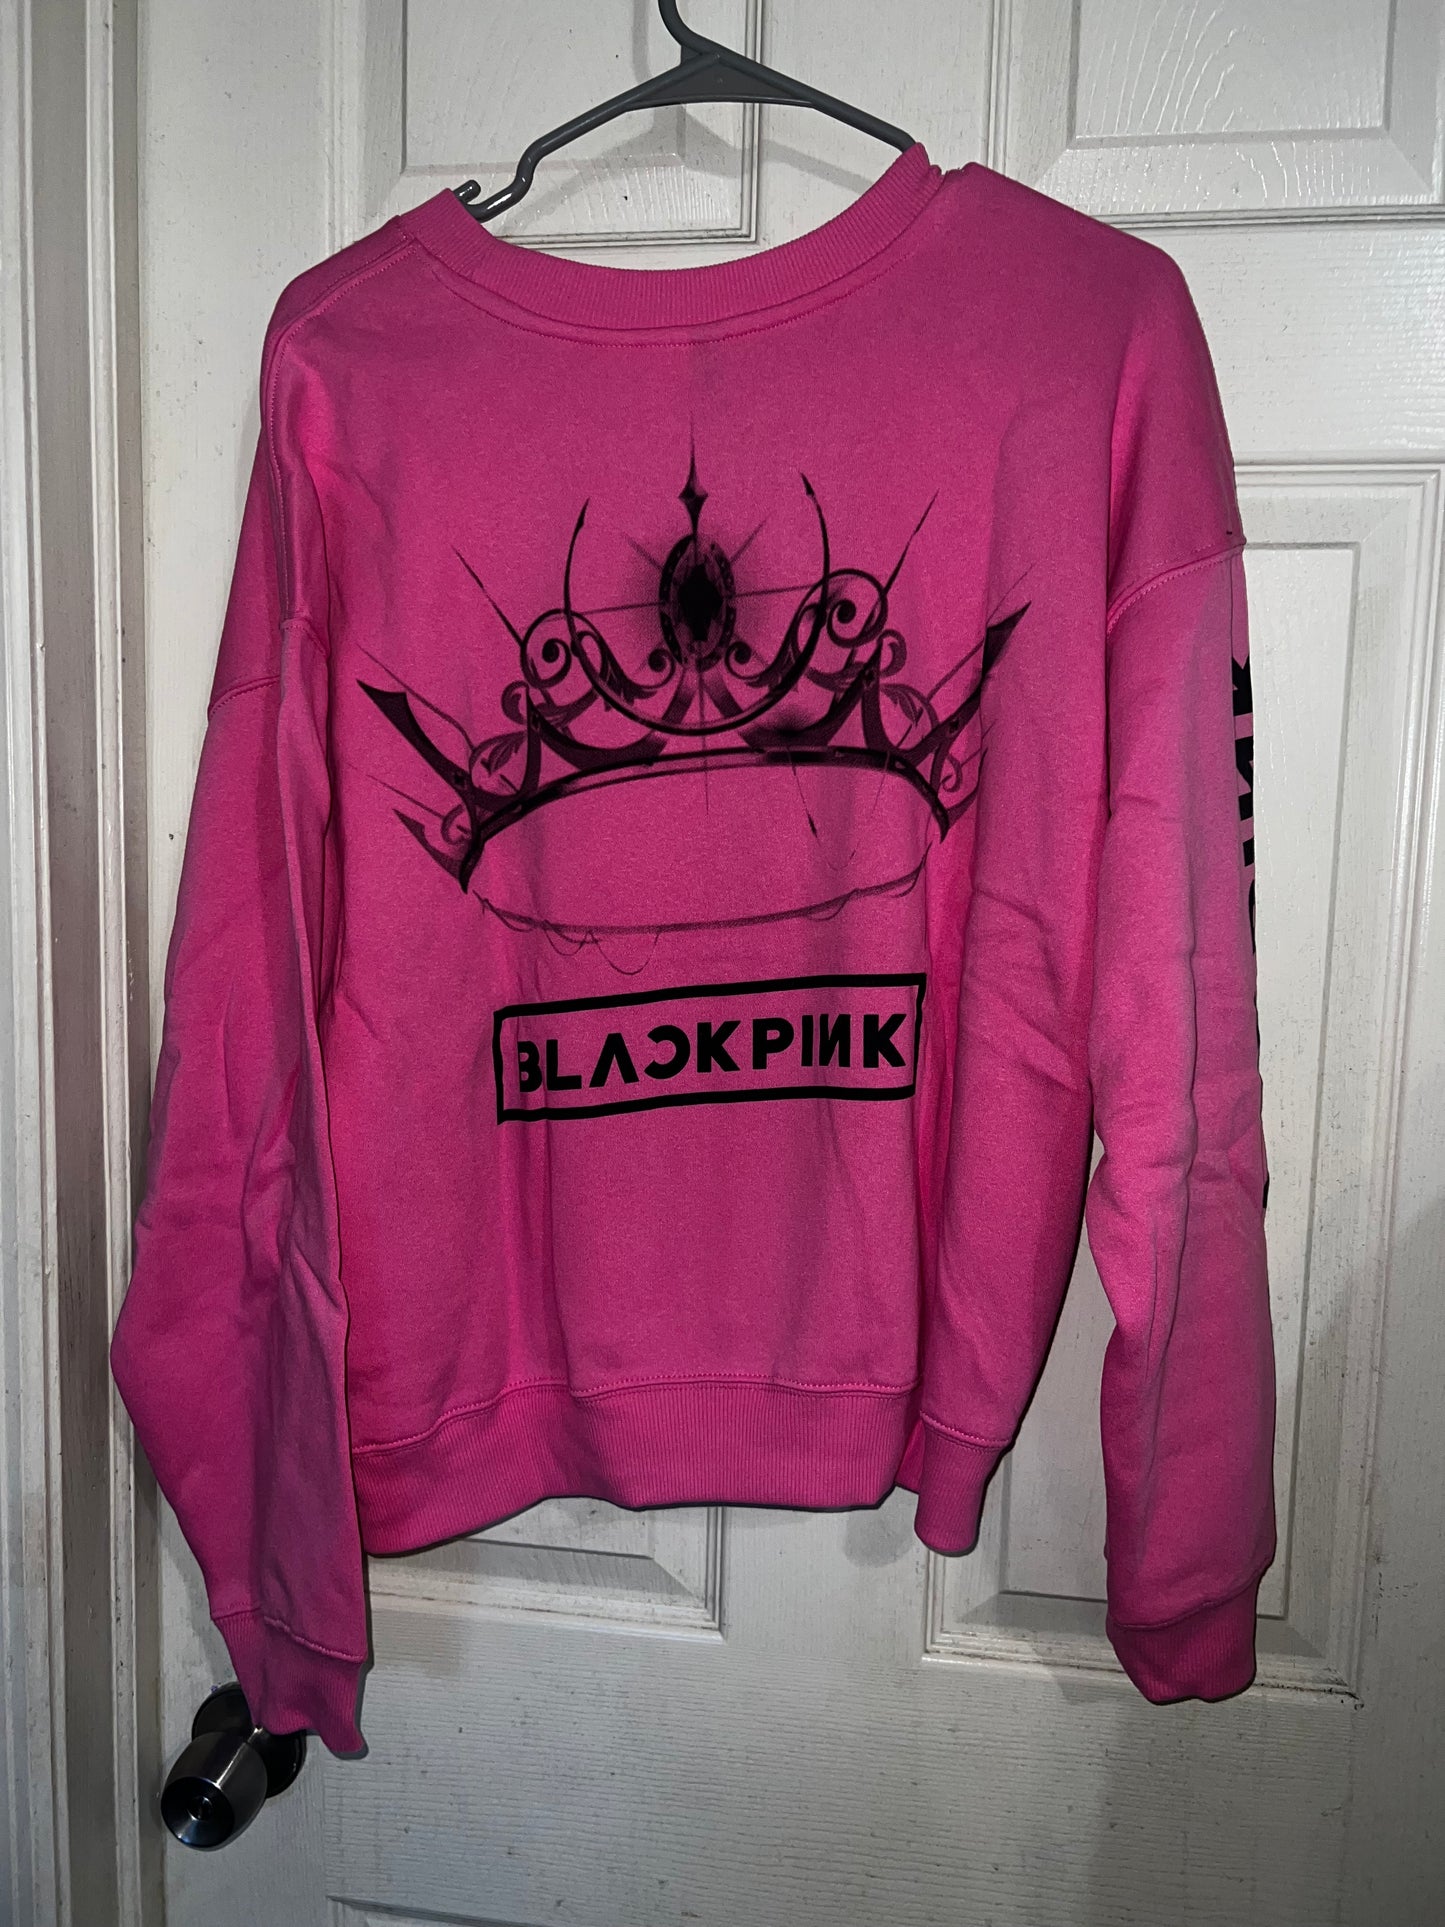 BLACKPINK Oversized Double Sided Sweatshirt